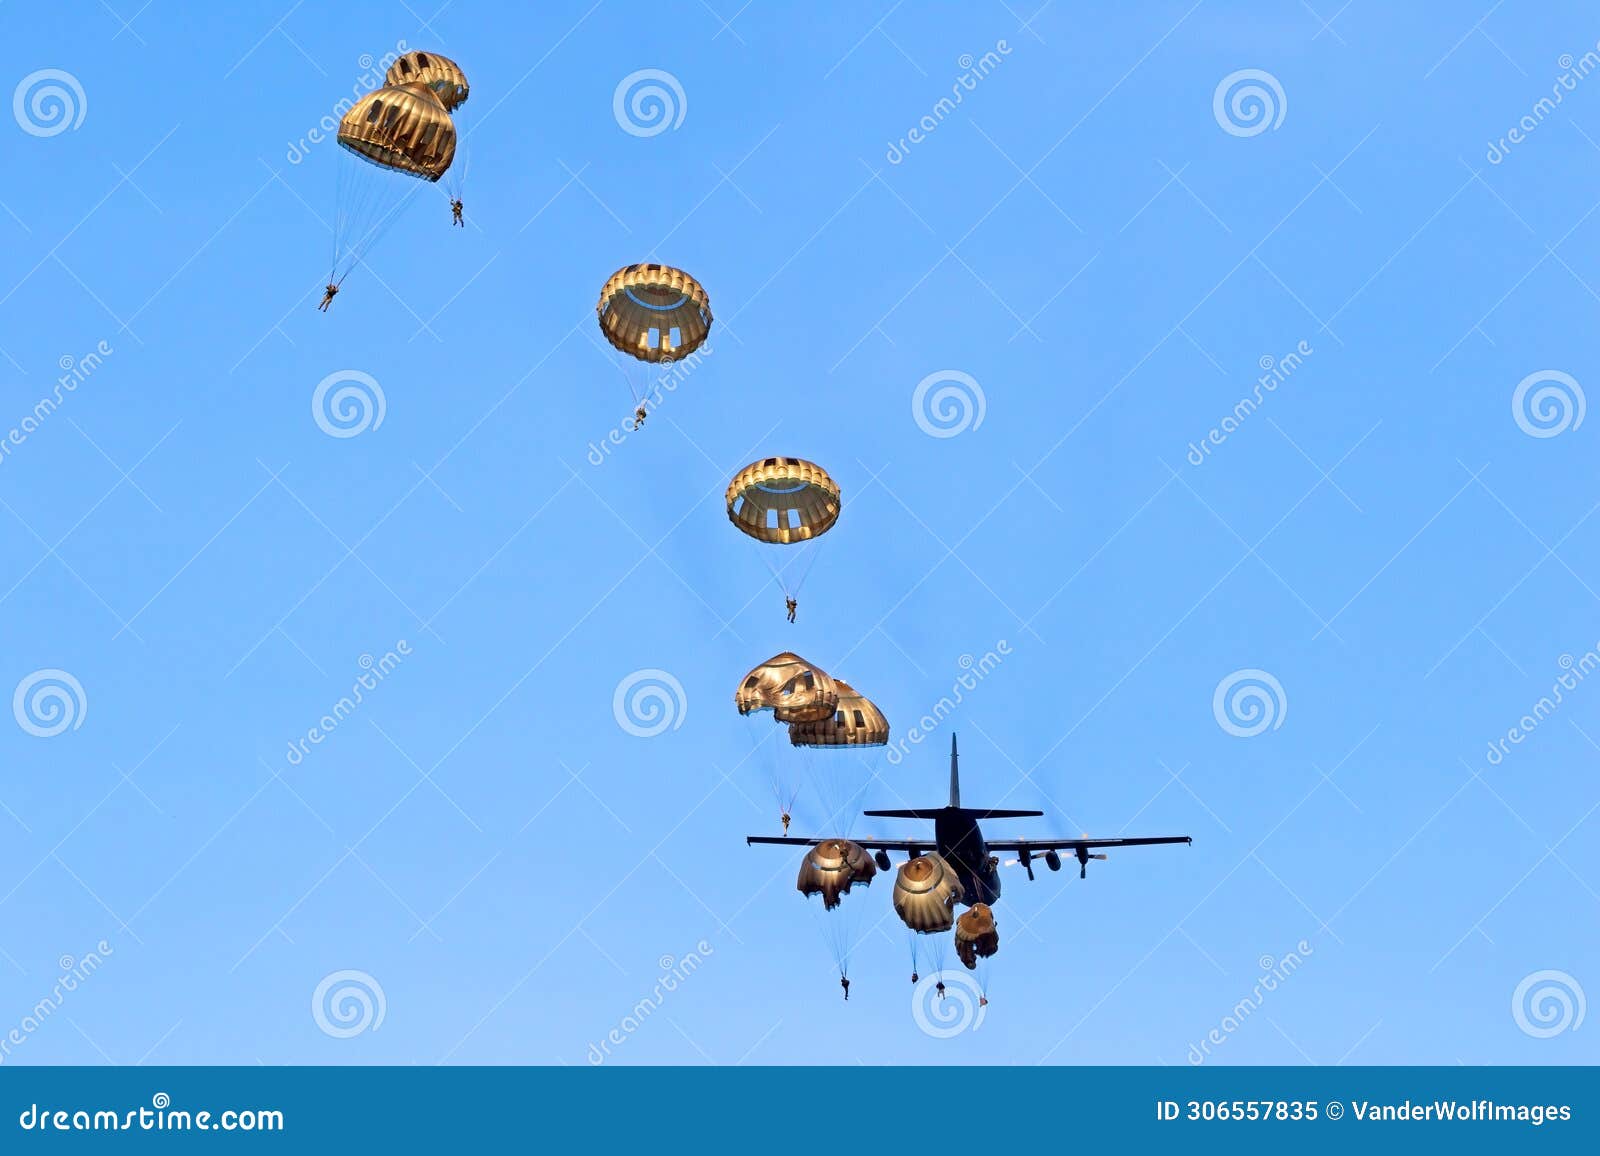 military parachutist paratroopers parachute jumping